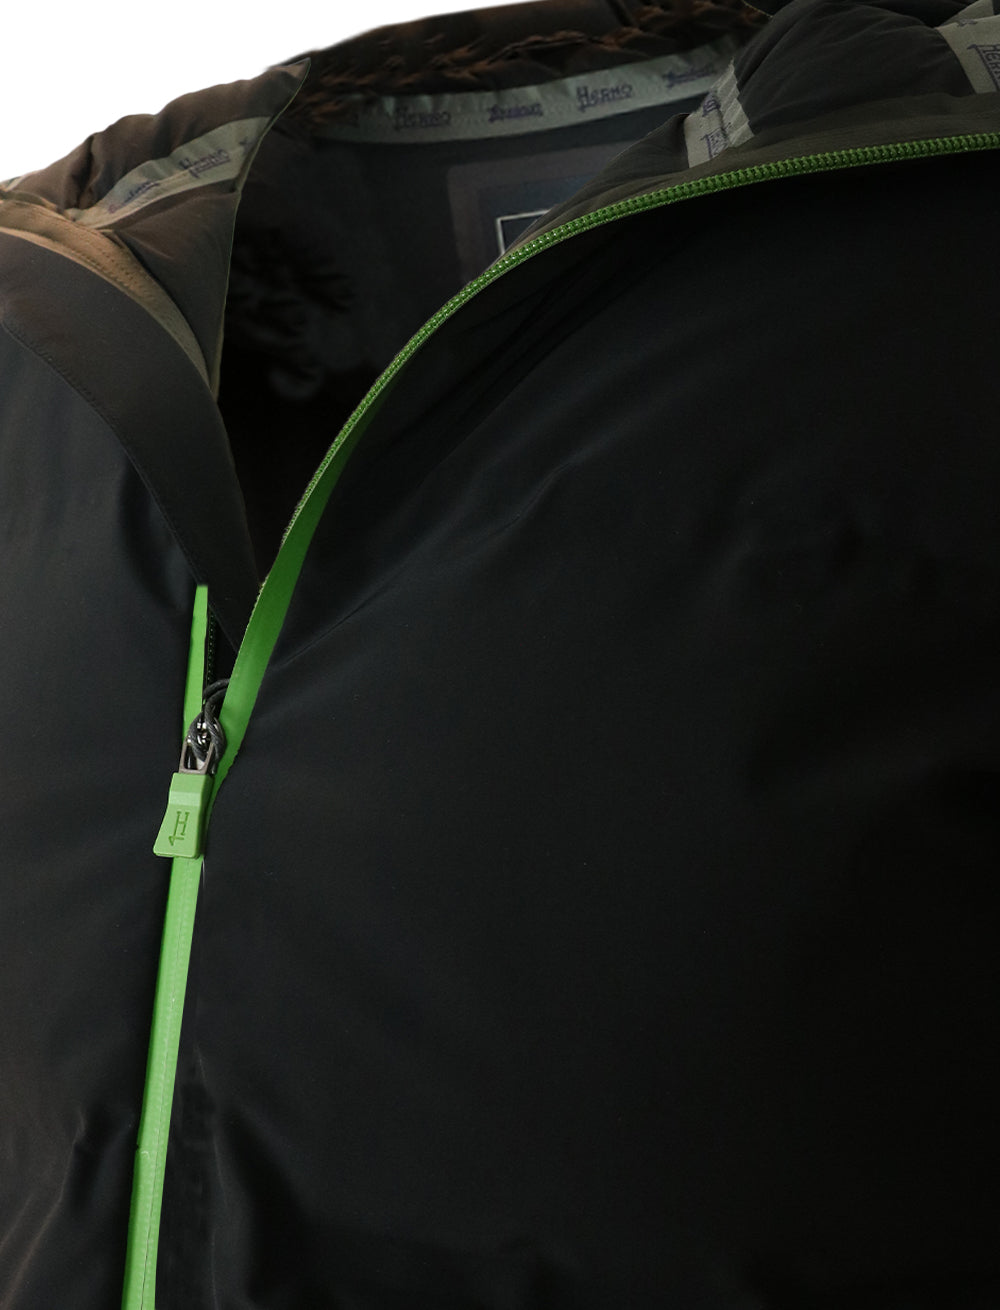 HERNO Laminar Contrast Jacket in Black/Green